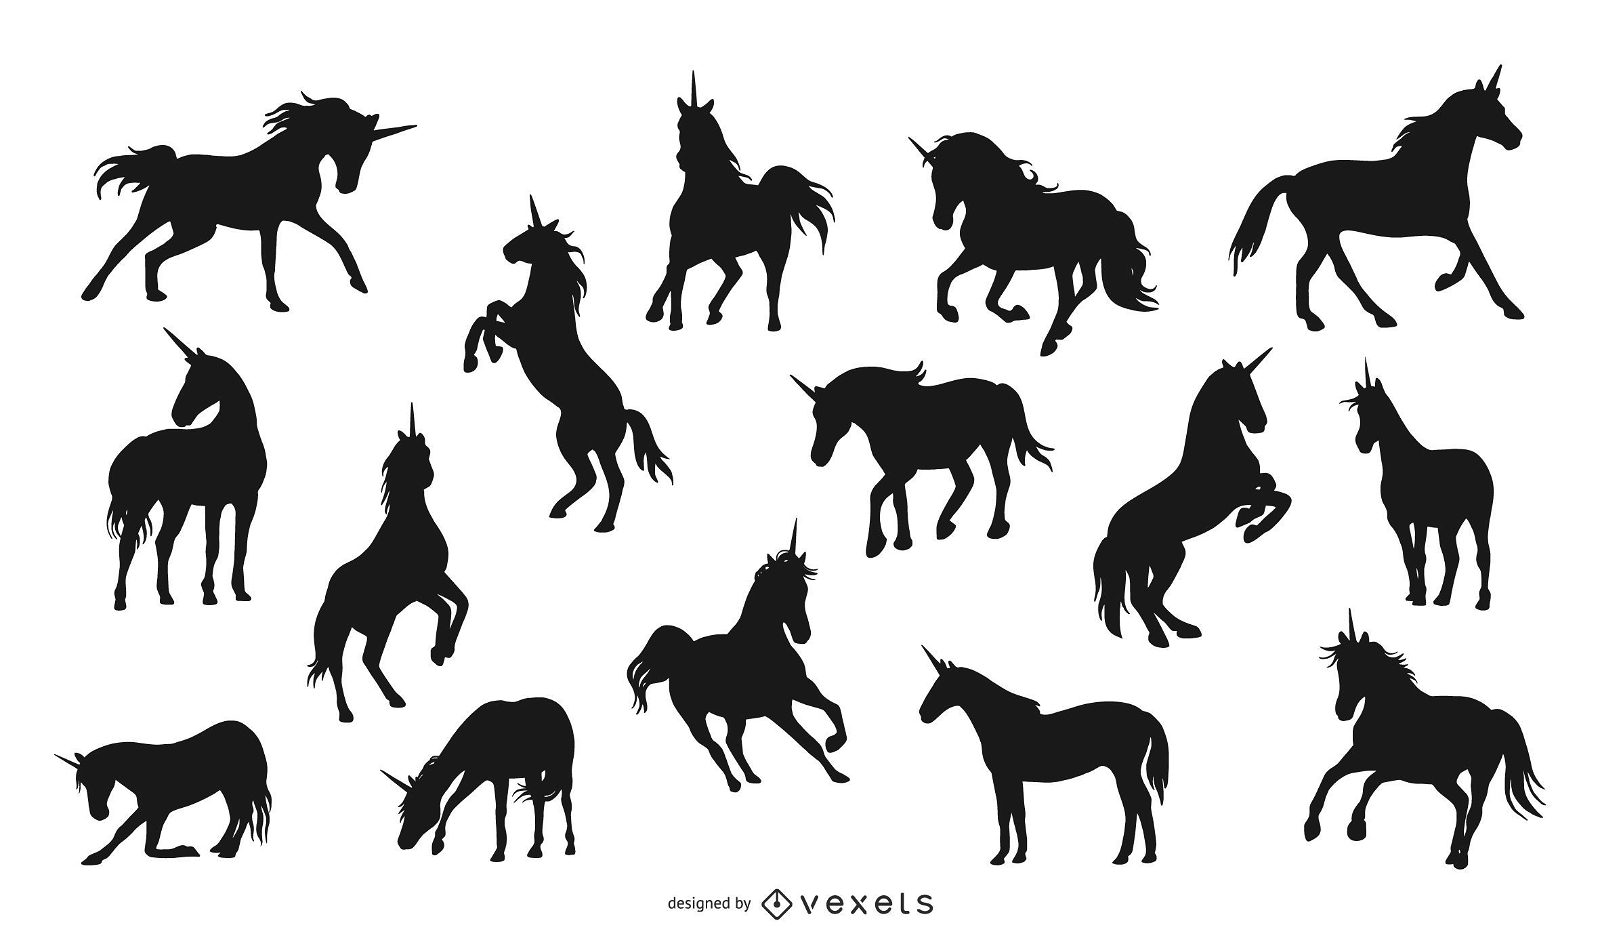 Unicorn silhouette collection